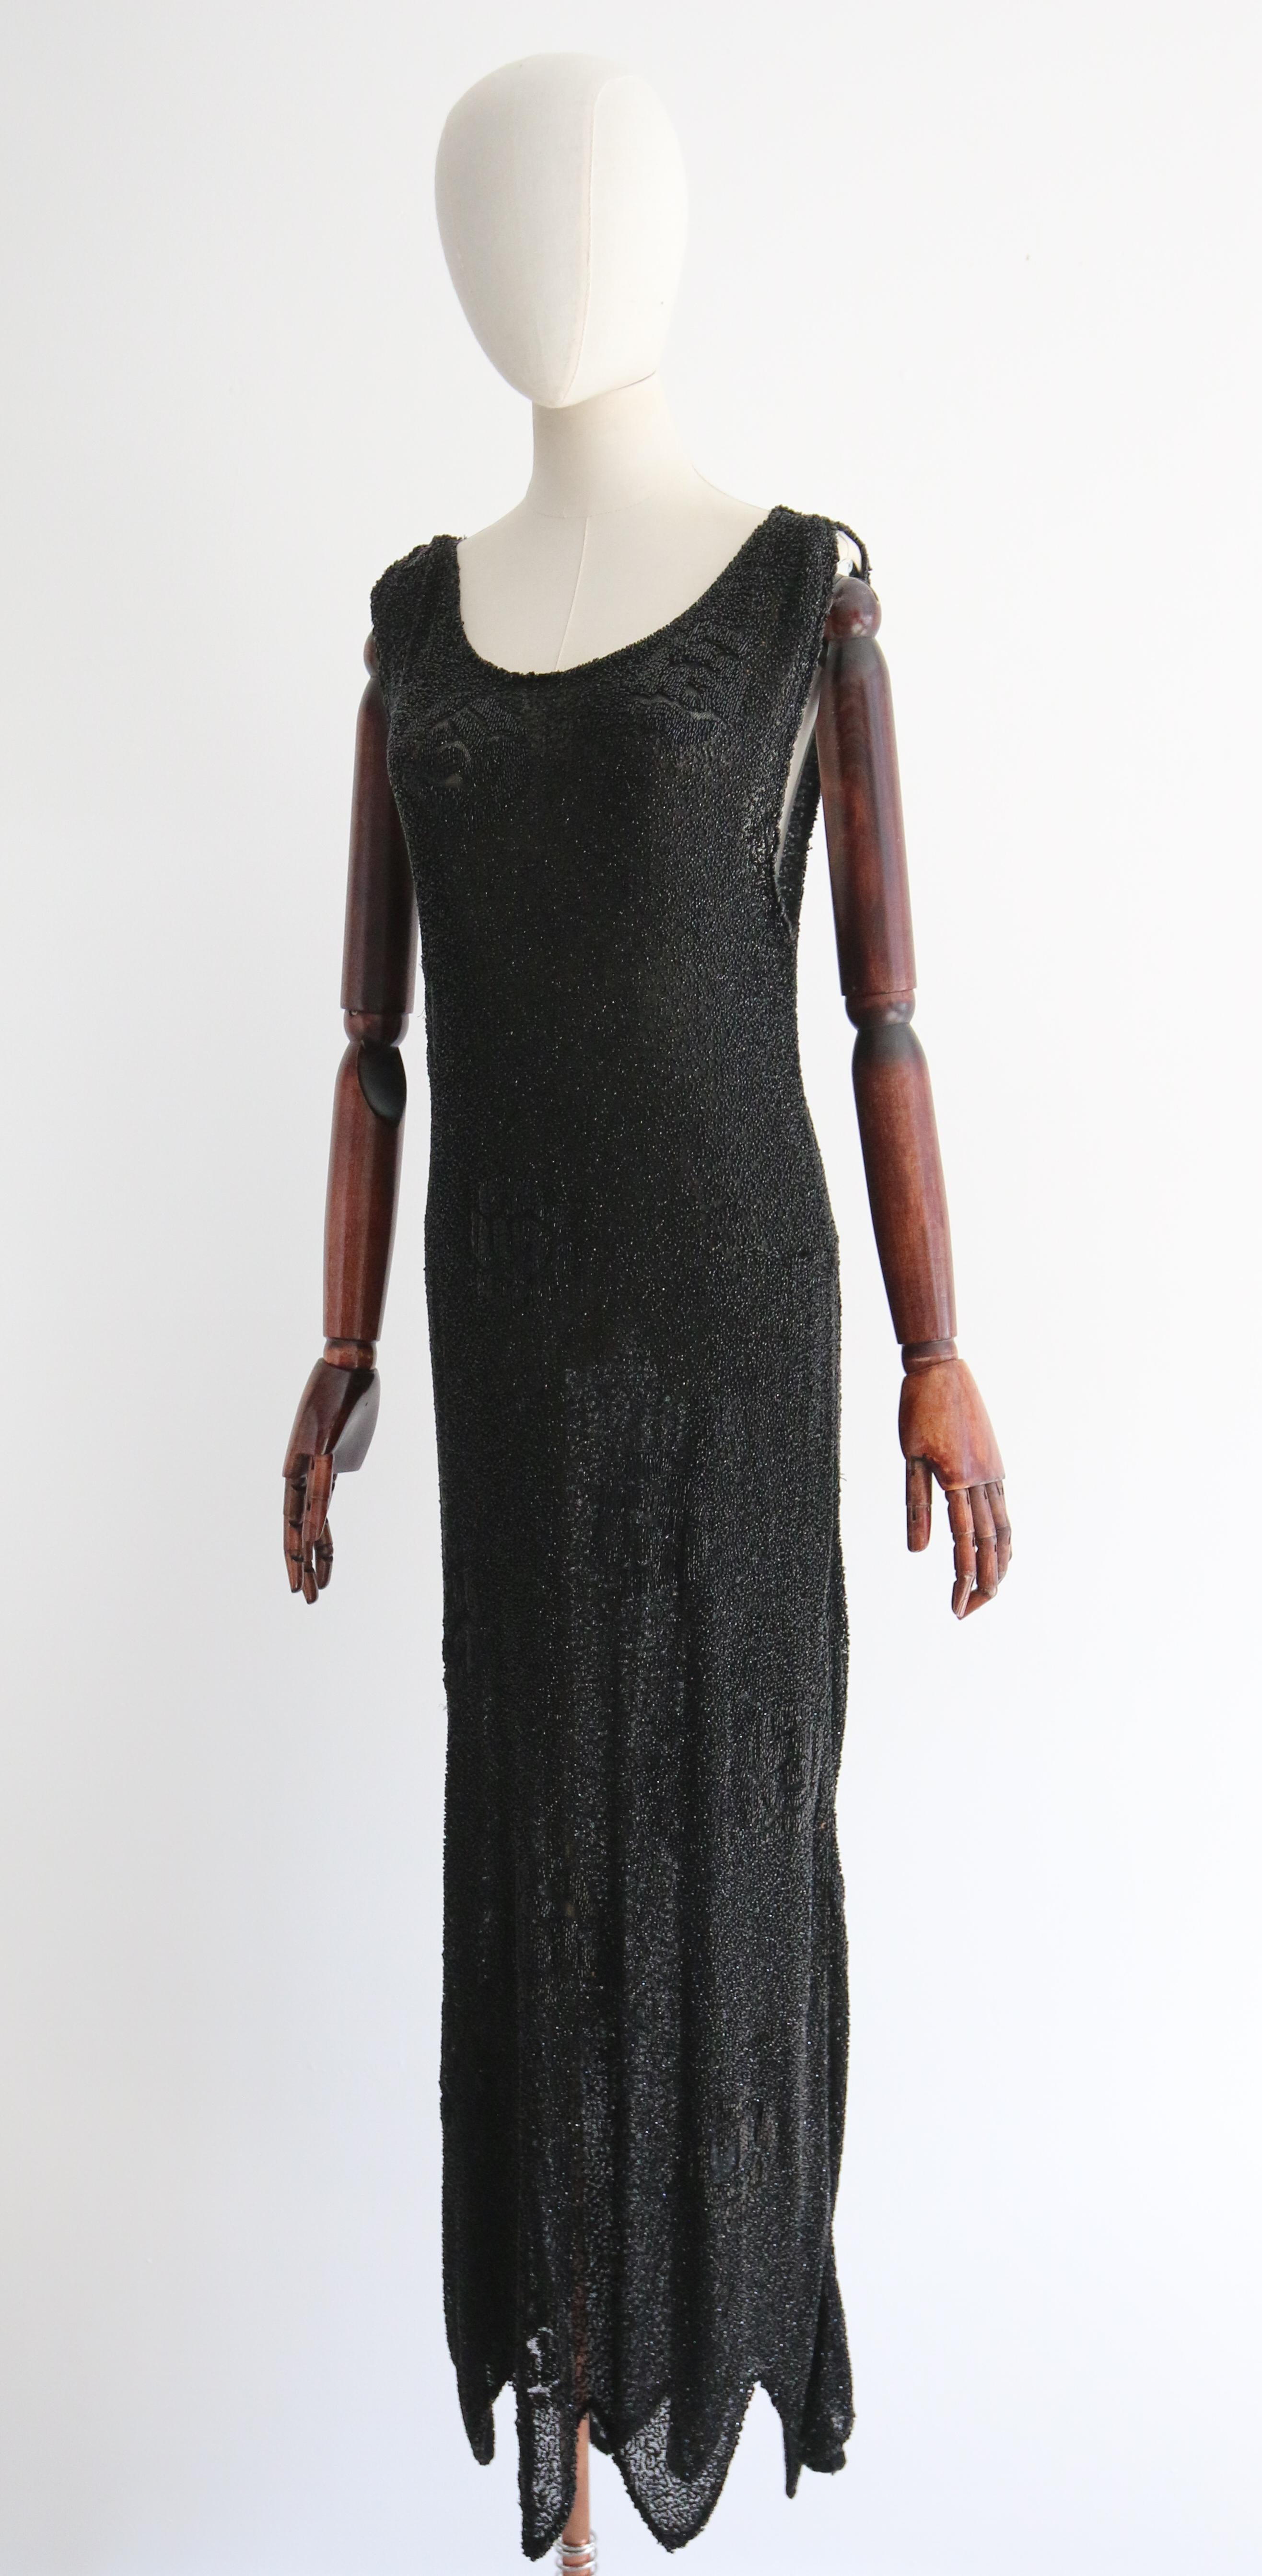 Vintage 1920's Black Beaded Evening Dress UK 12-14 US 8-10 2